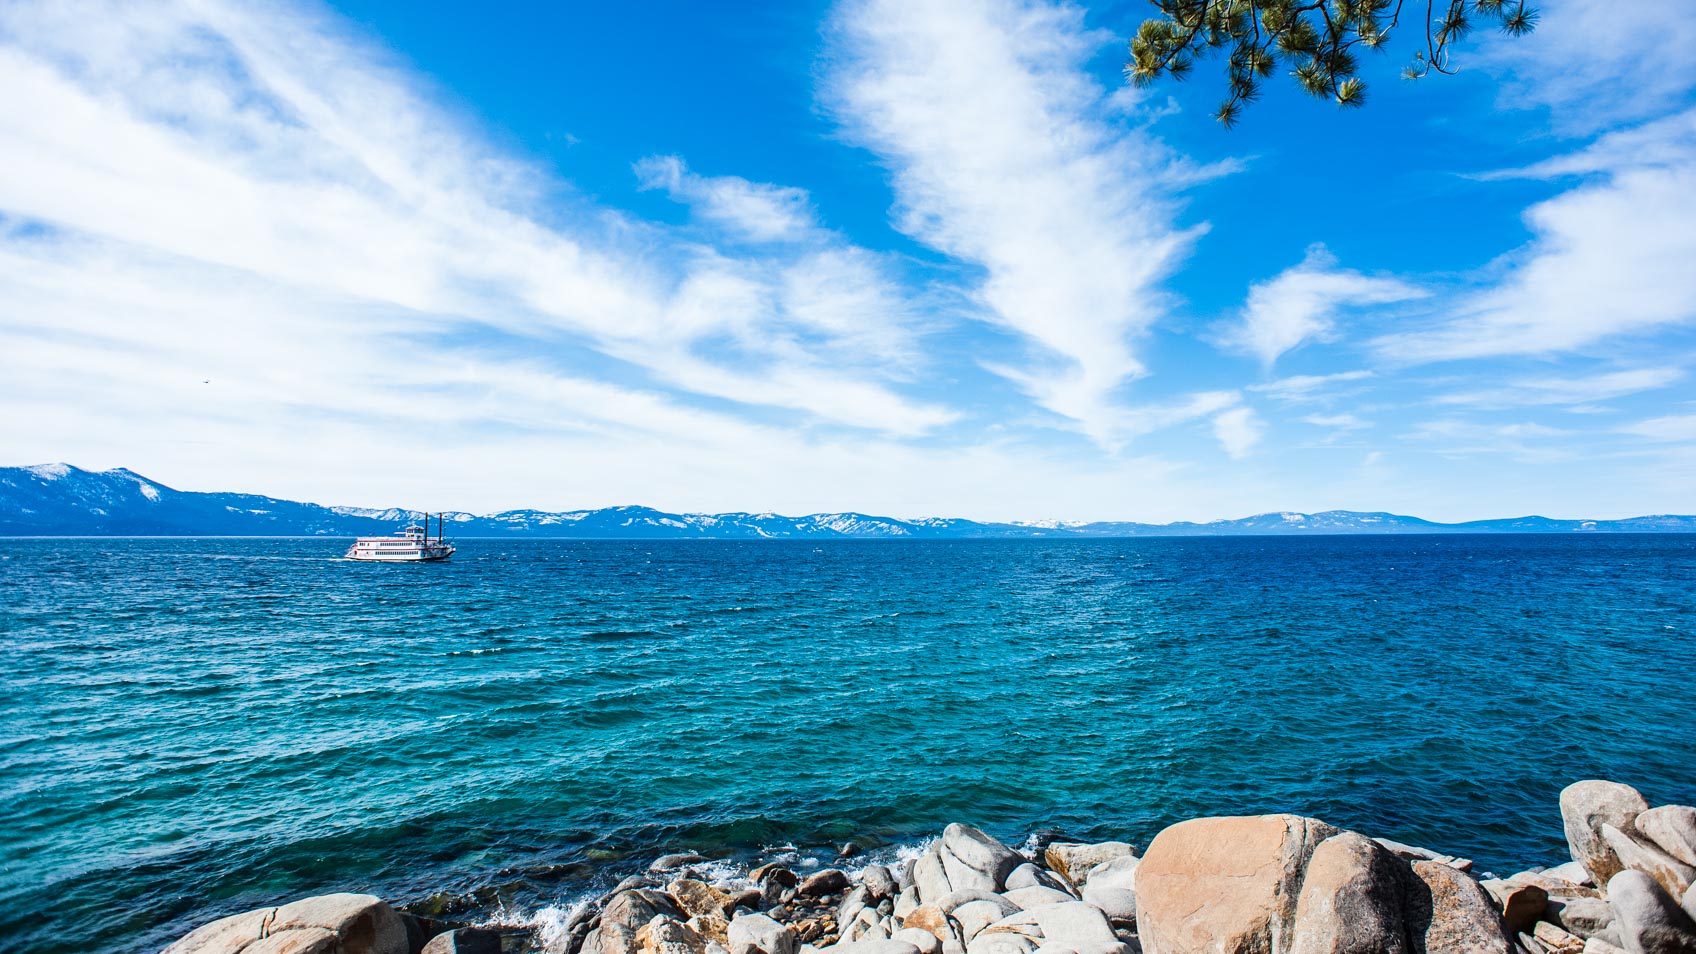 Lake Tahoe Boat Inspection Stations Open for Season